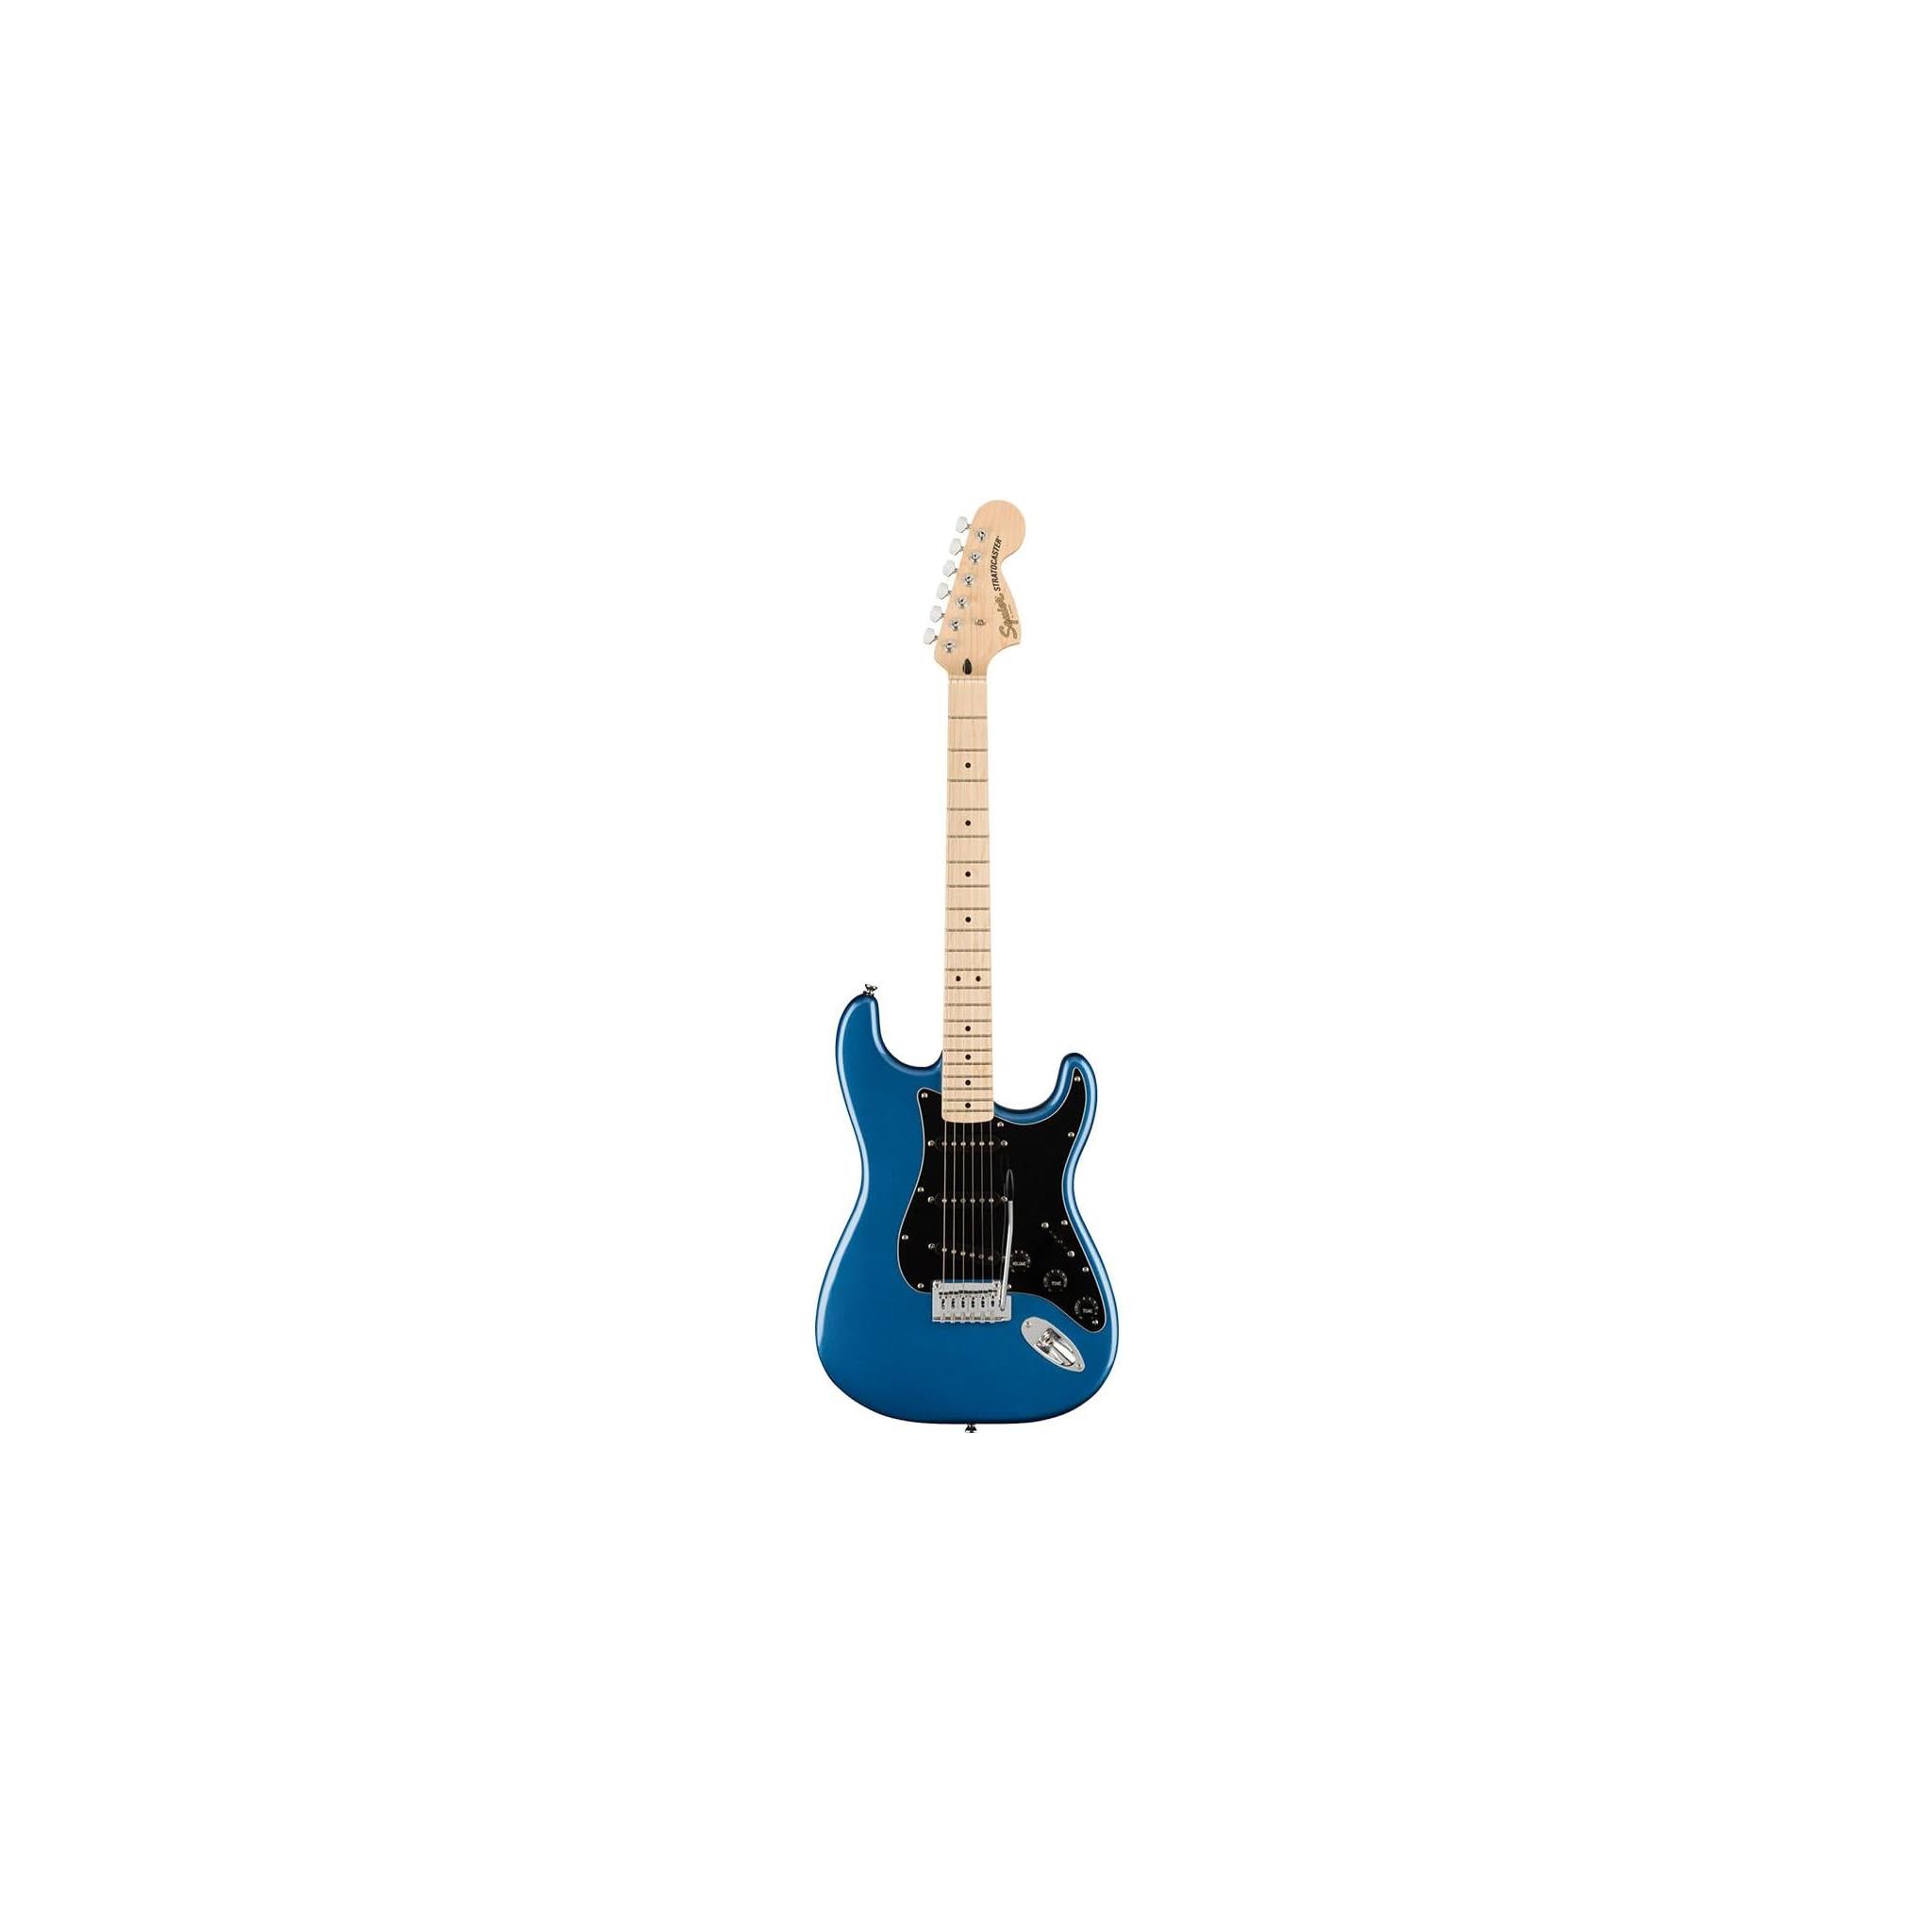 Squier Affinity Series™ Stratocaster®, Maple Fingerboard, Black Pickguard, Lake Placid Blue